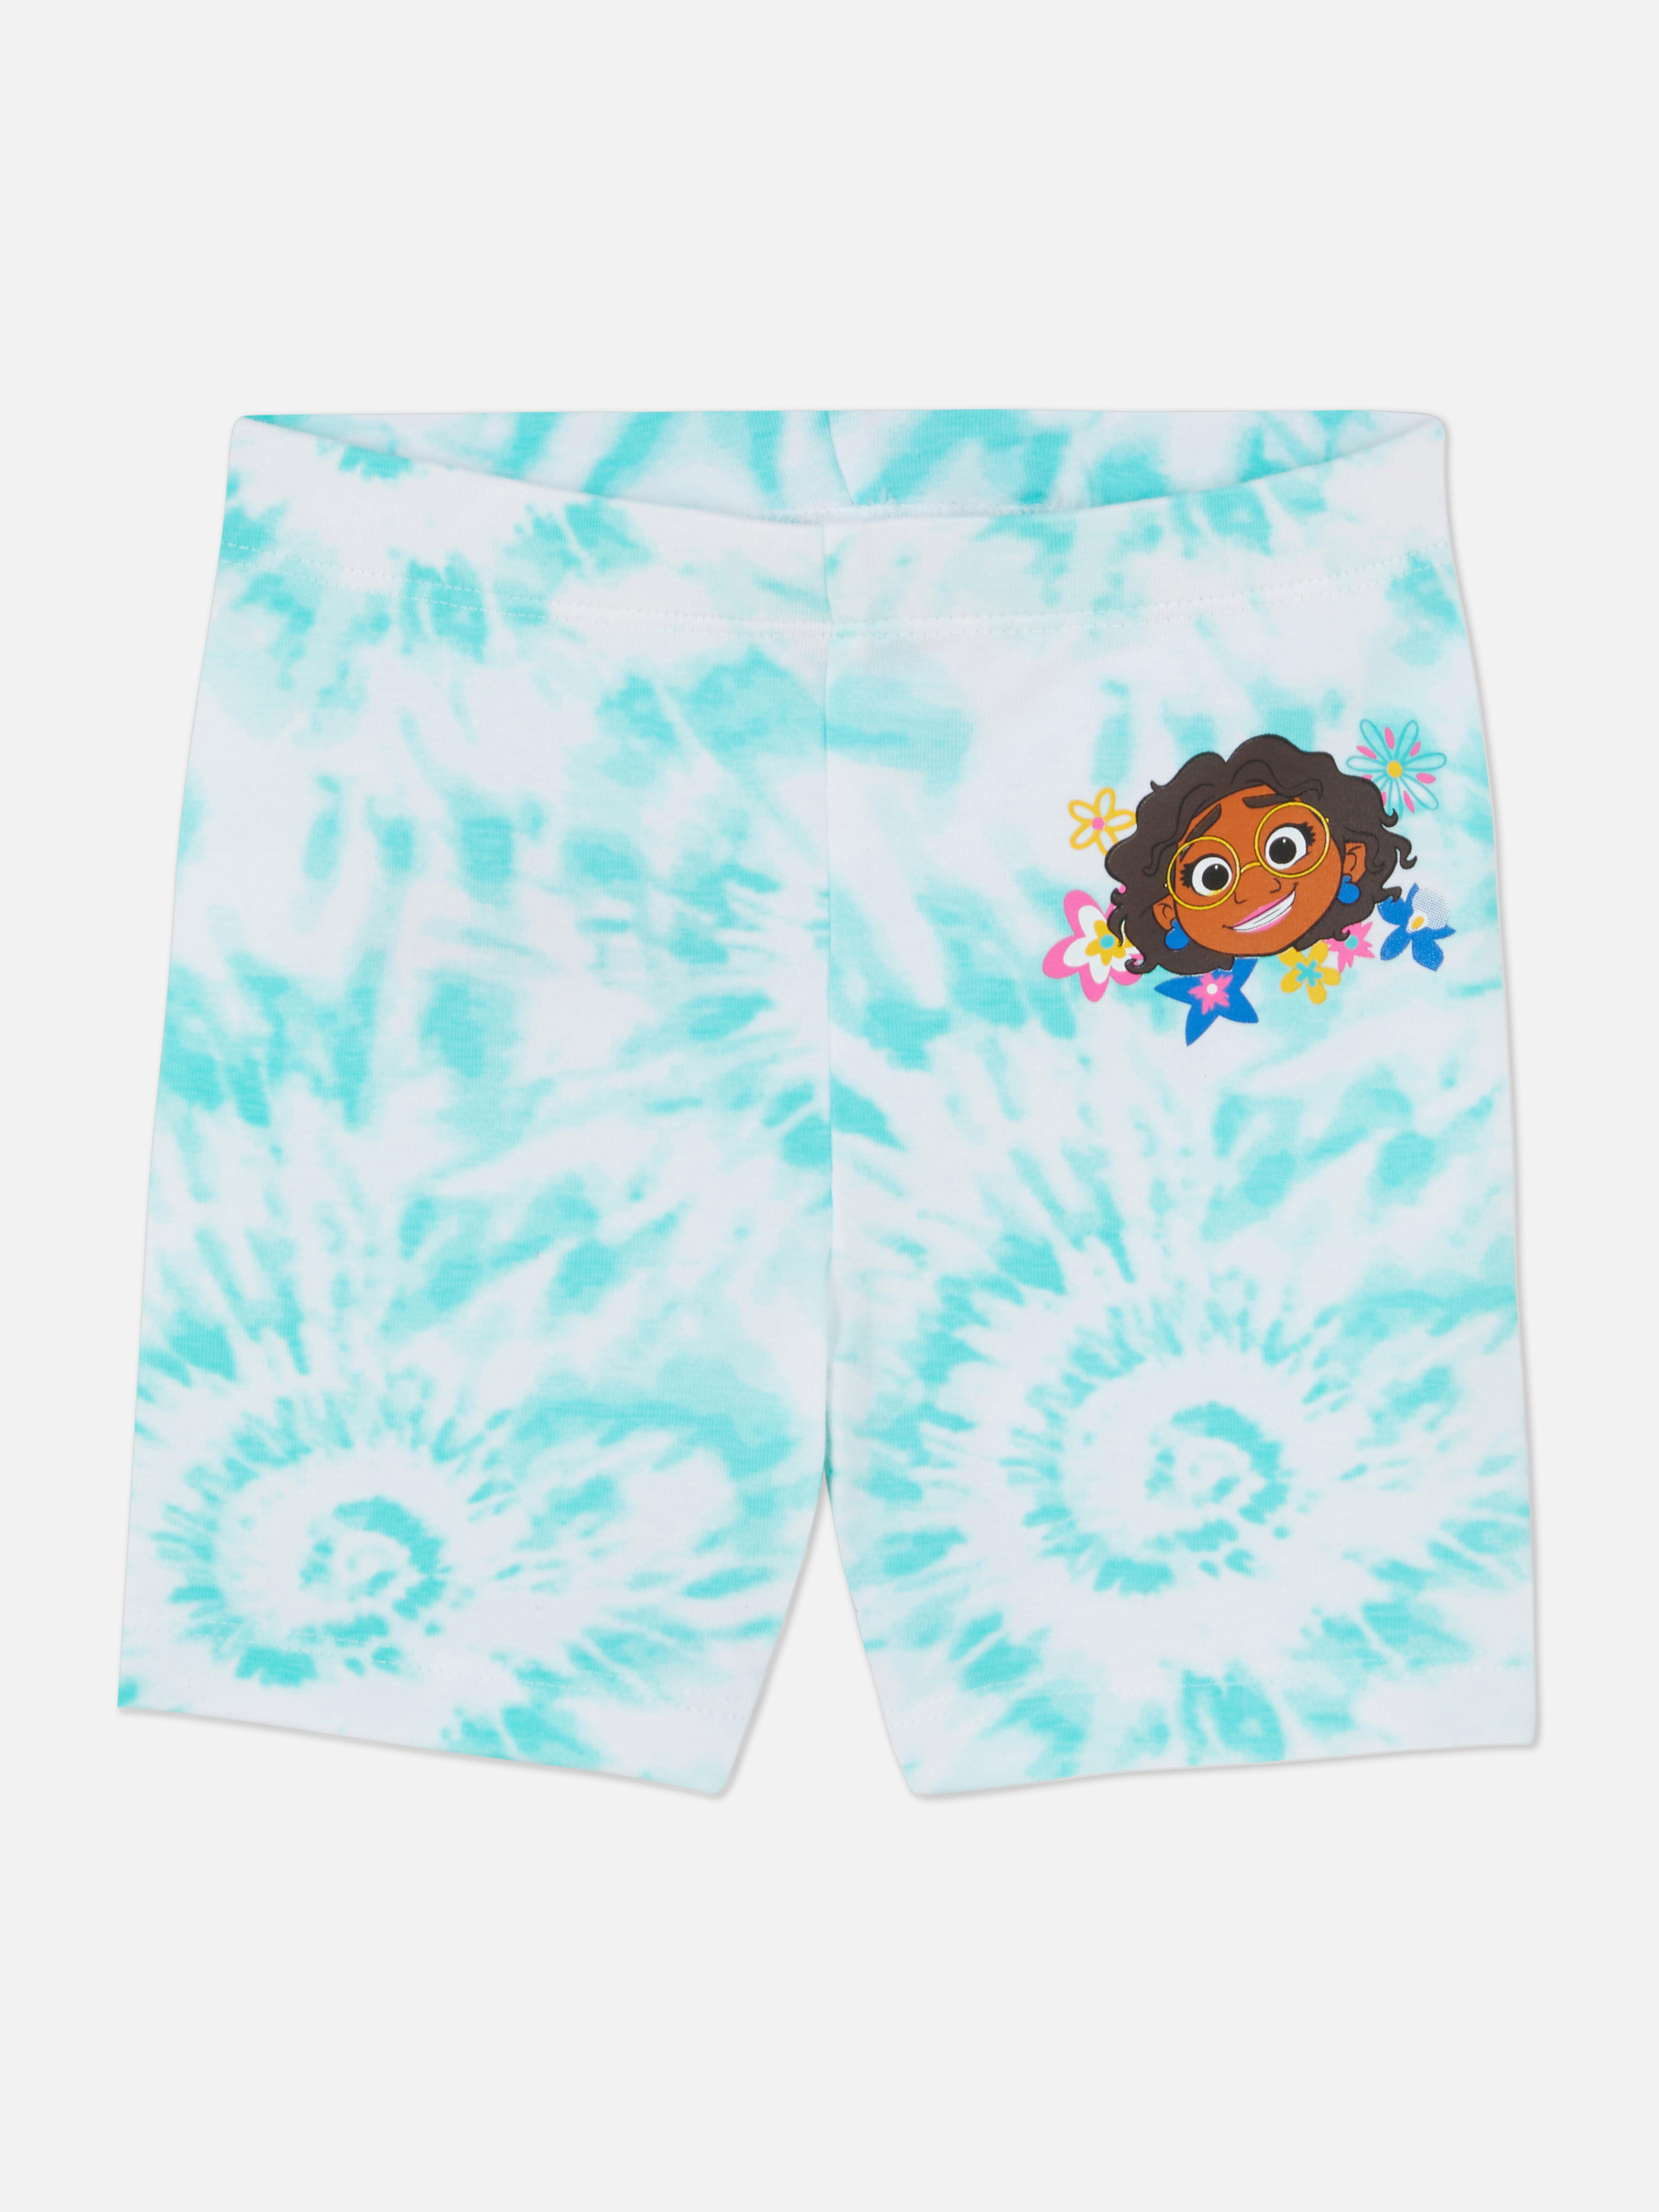 Disney’s Encanto Tie-Dye Shorts